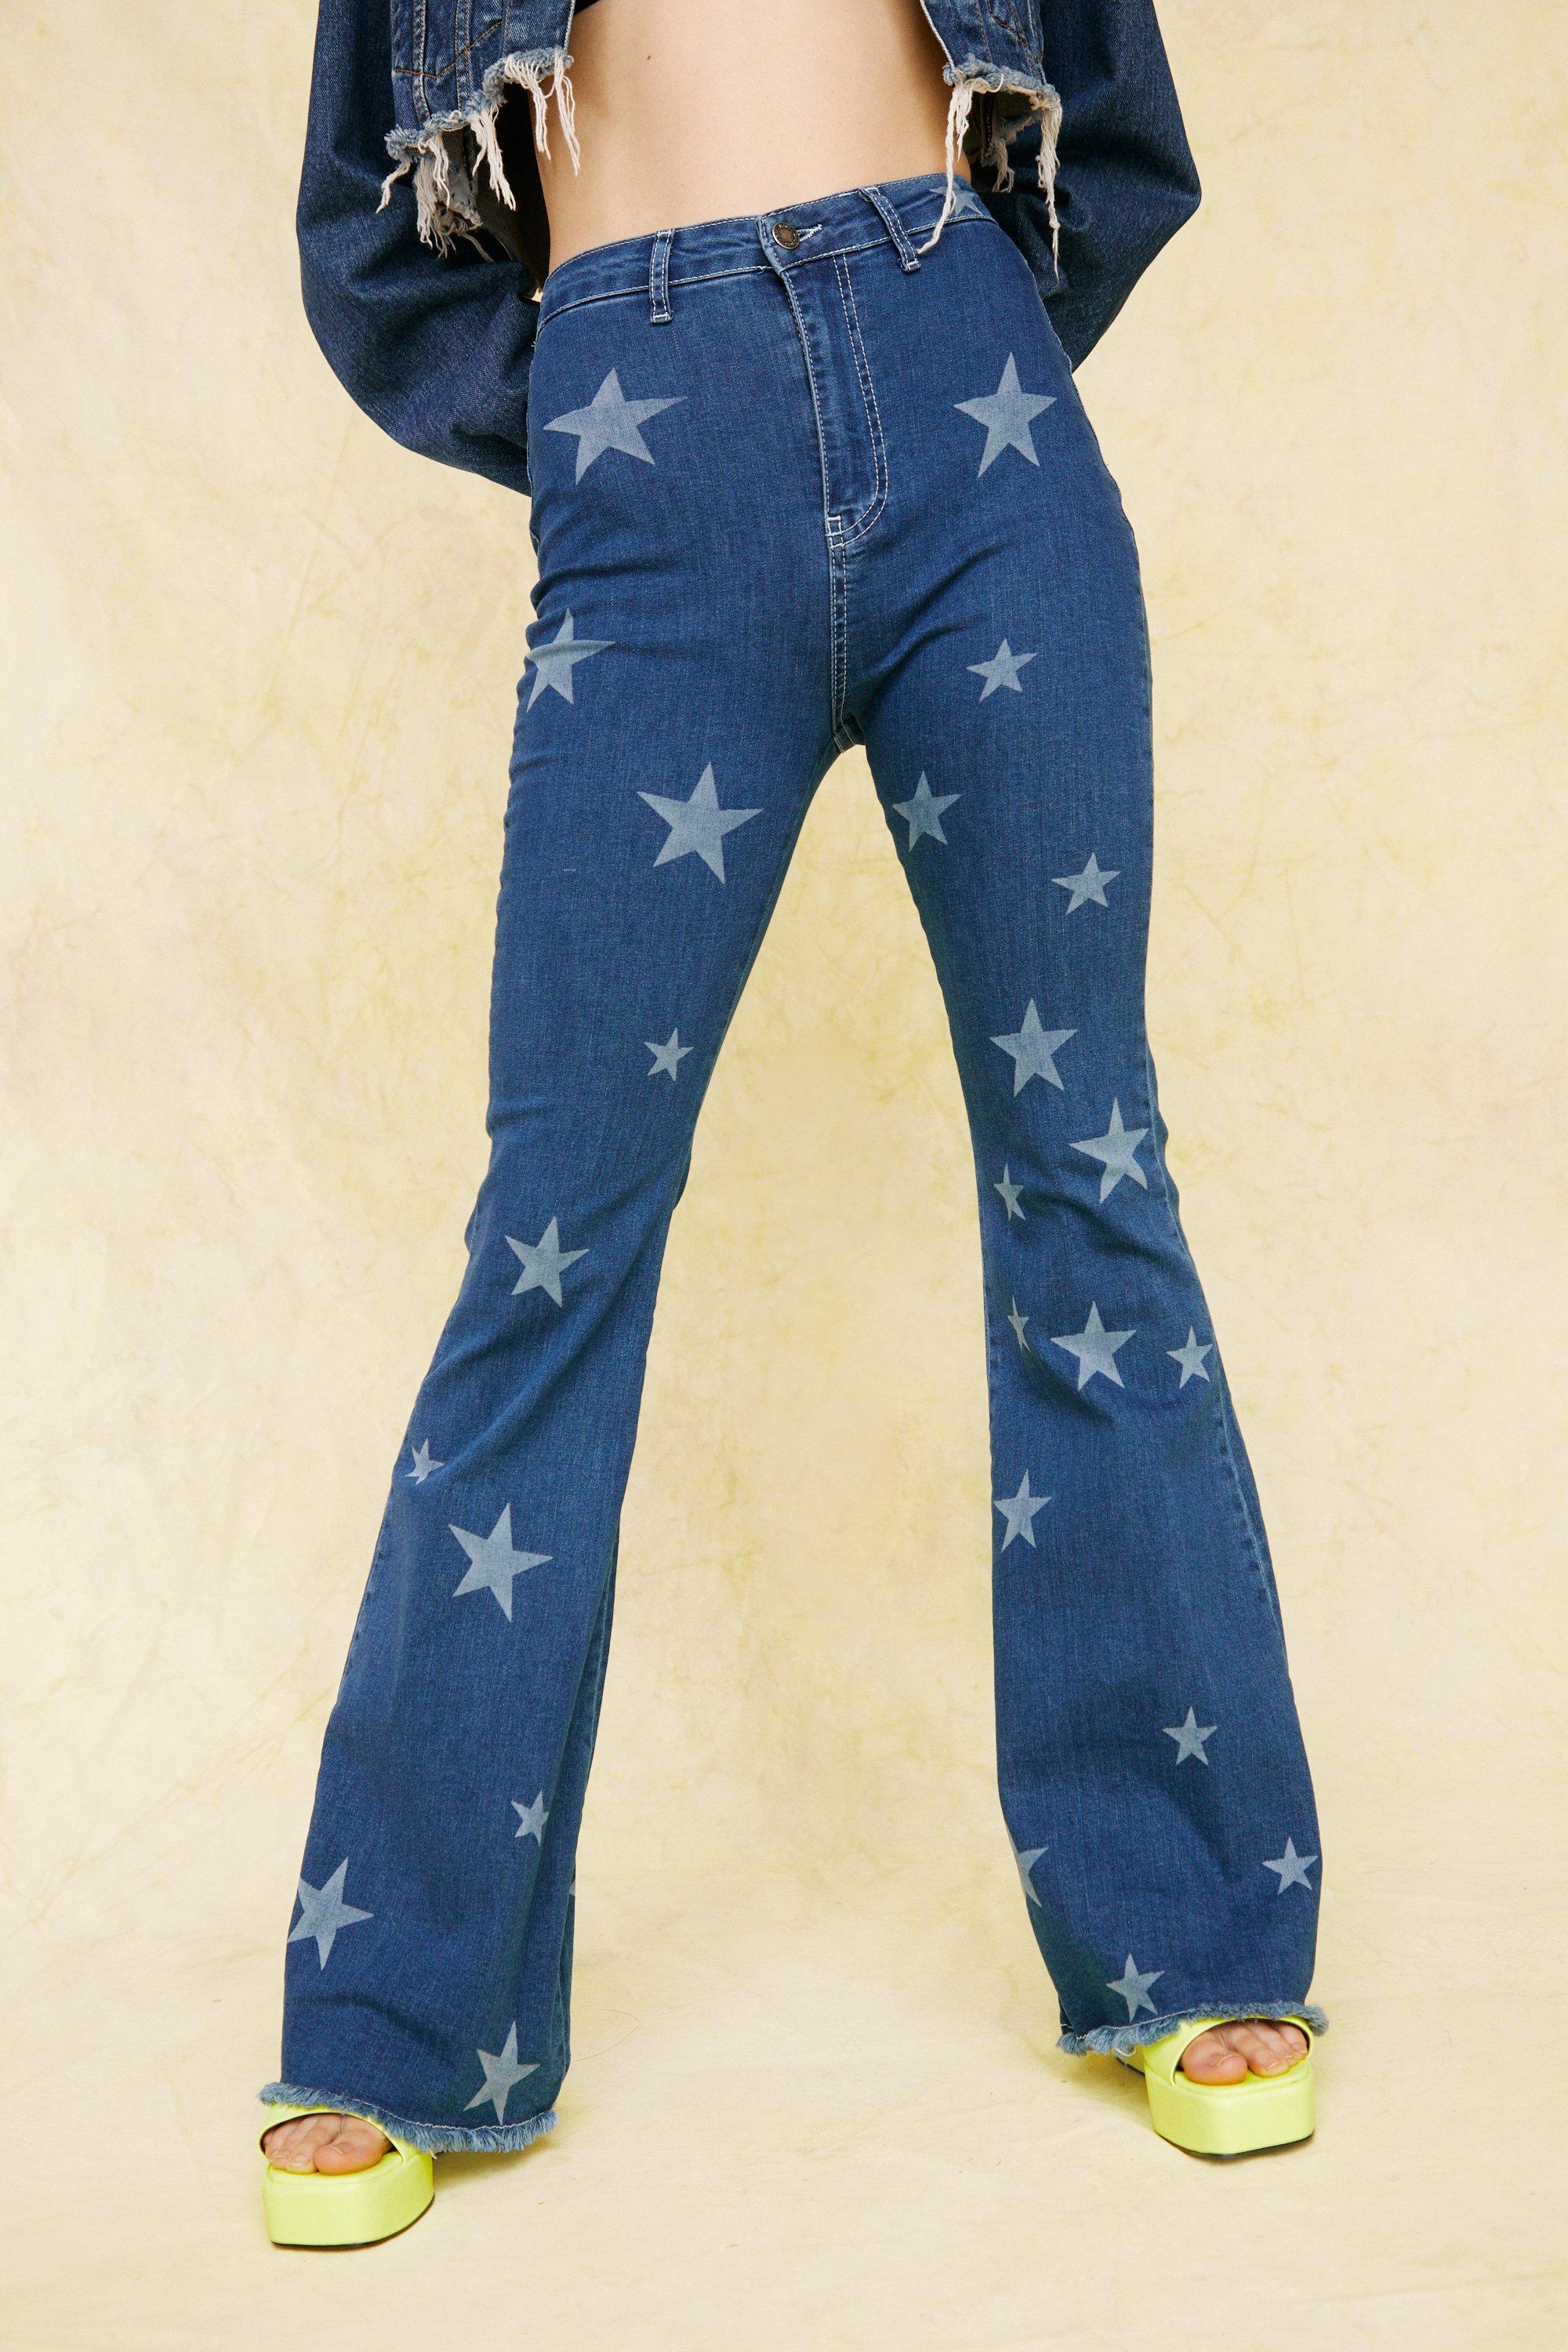 high star jeans